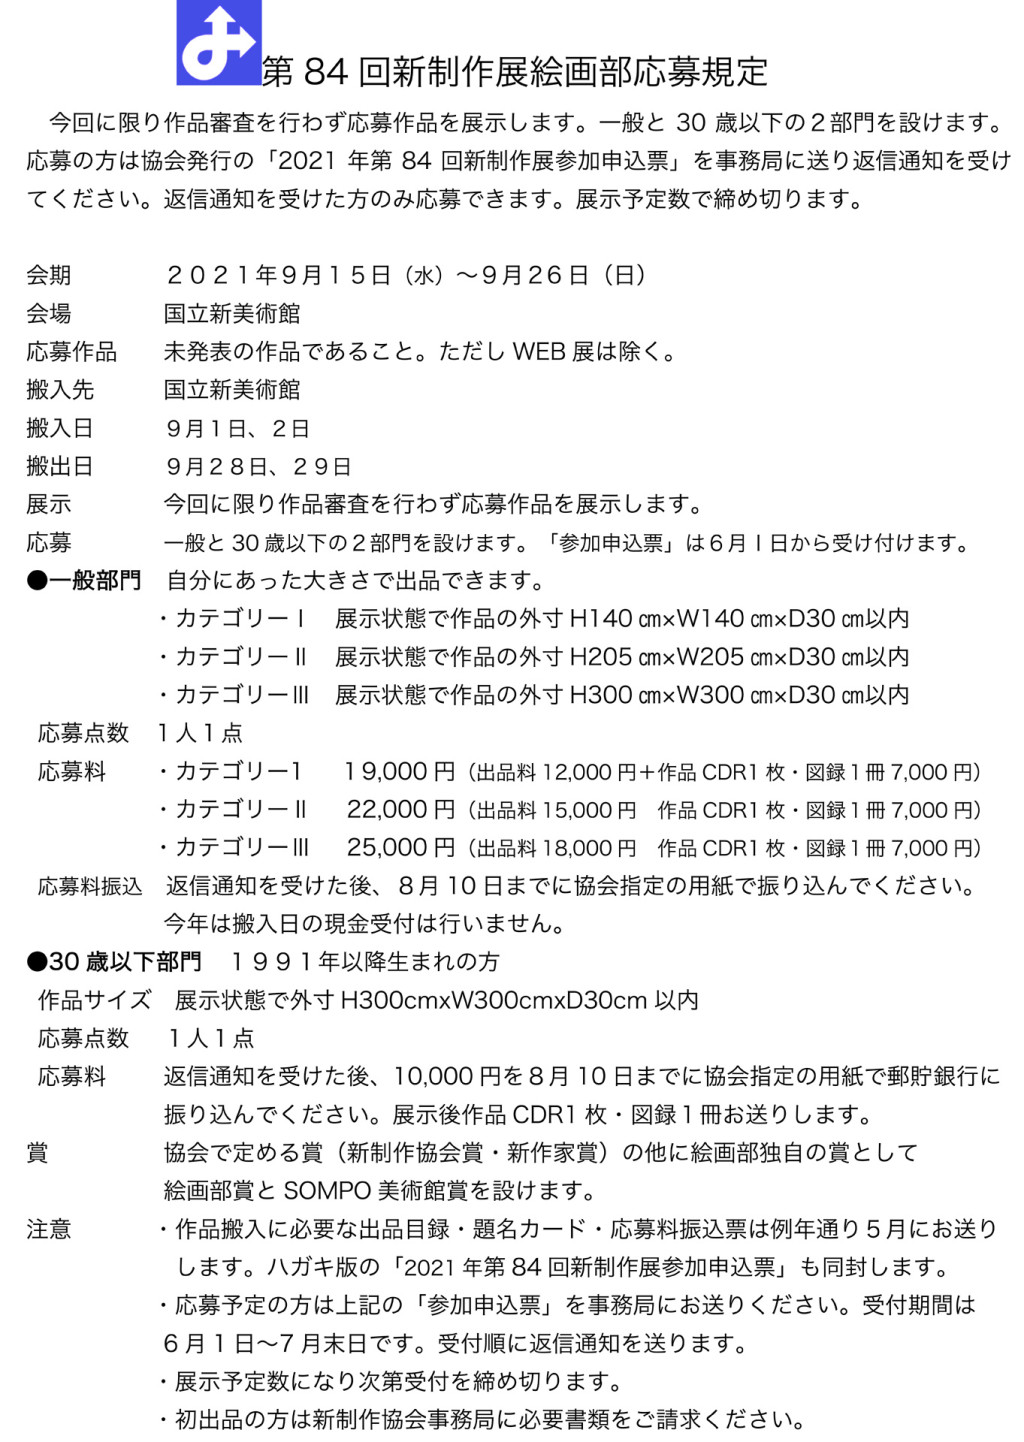 84thsinseisaku_Painting-Department-application-rules-final-draft